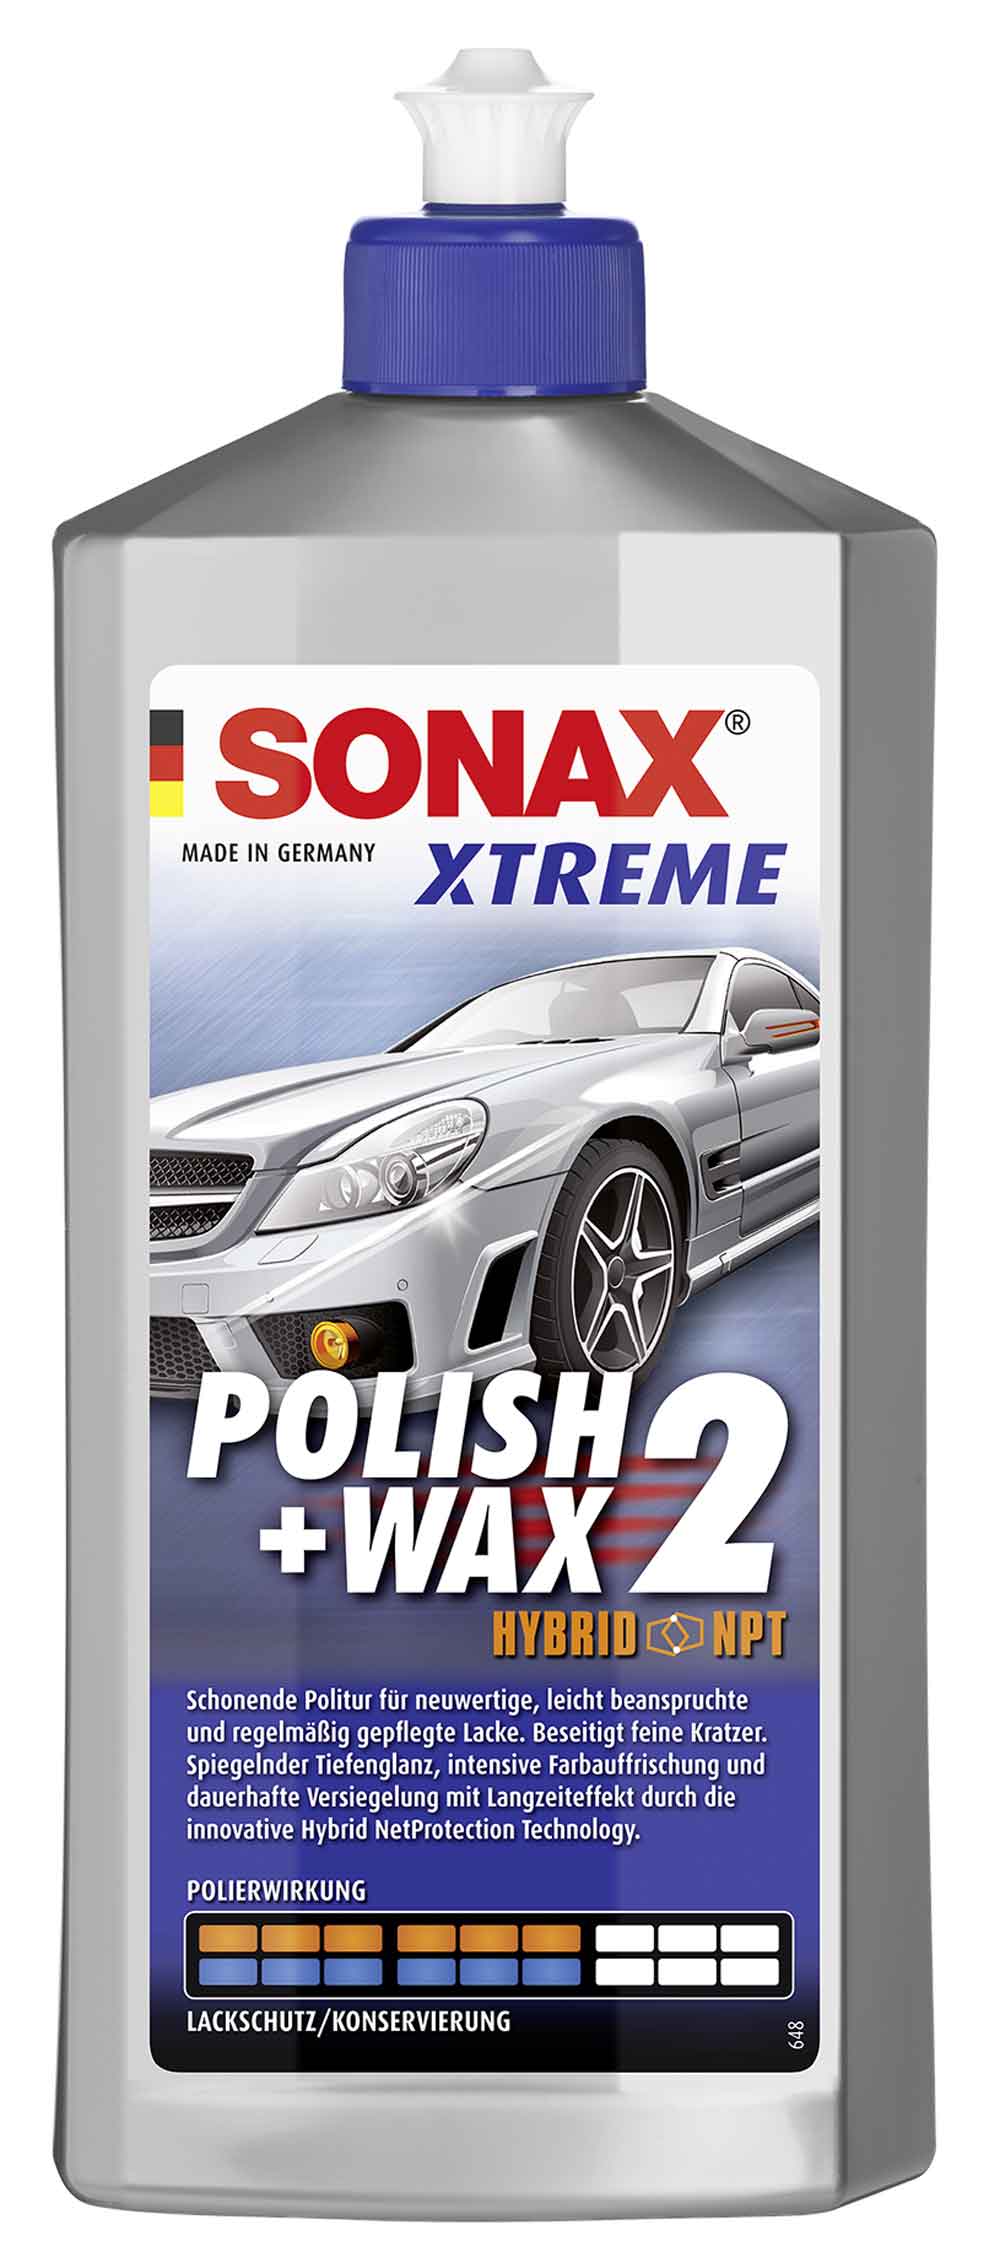 SONAX XTREME Polish+Wax 2 Hybrid NPT 500ml